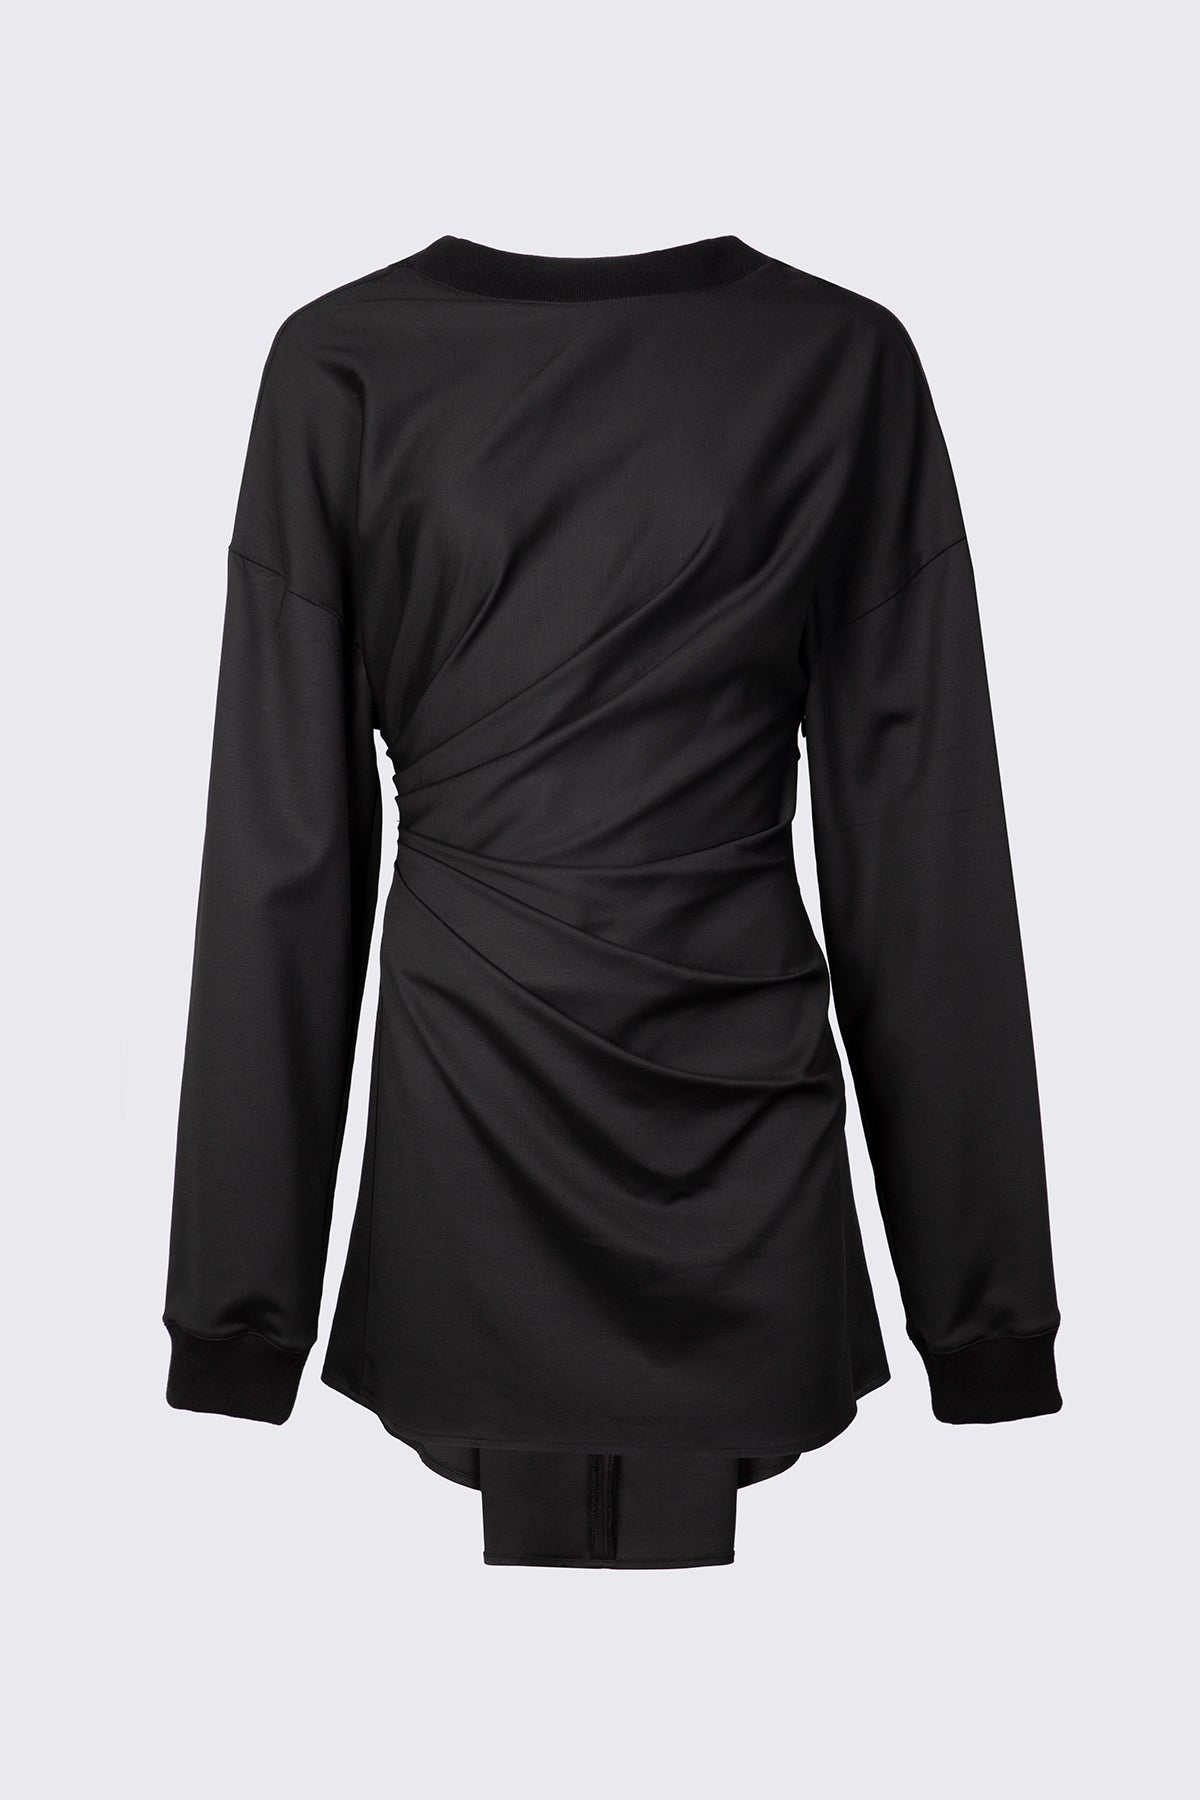 SHAUNA DRESS | BLACK